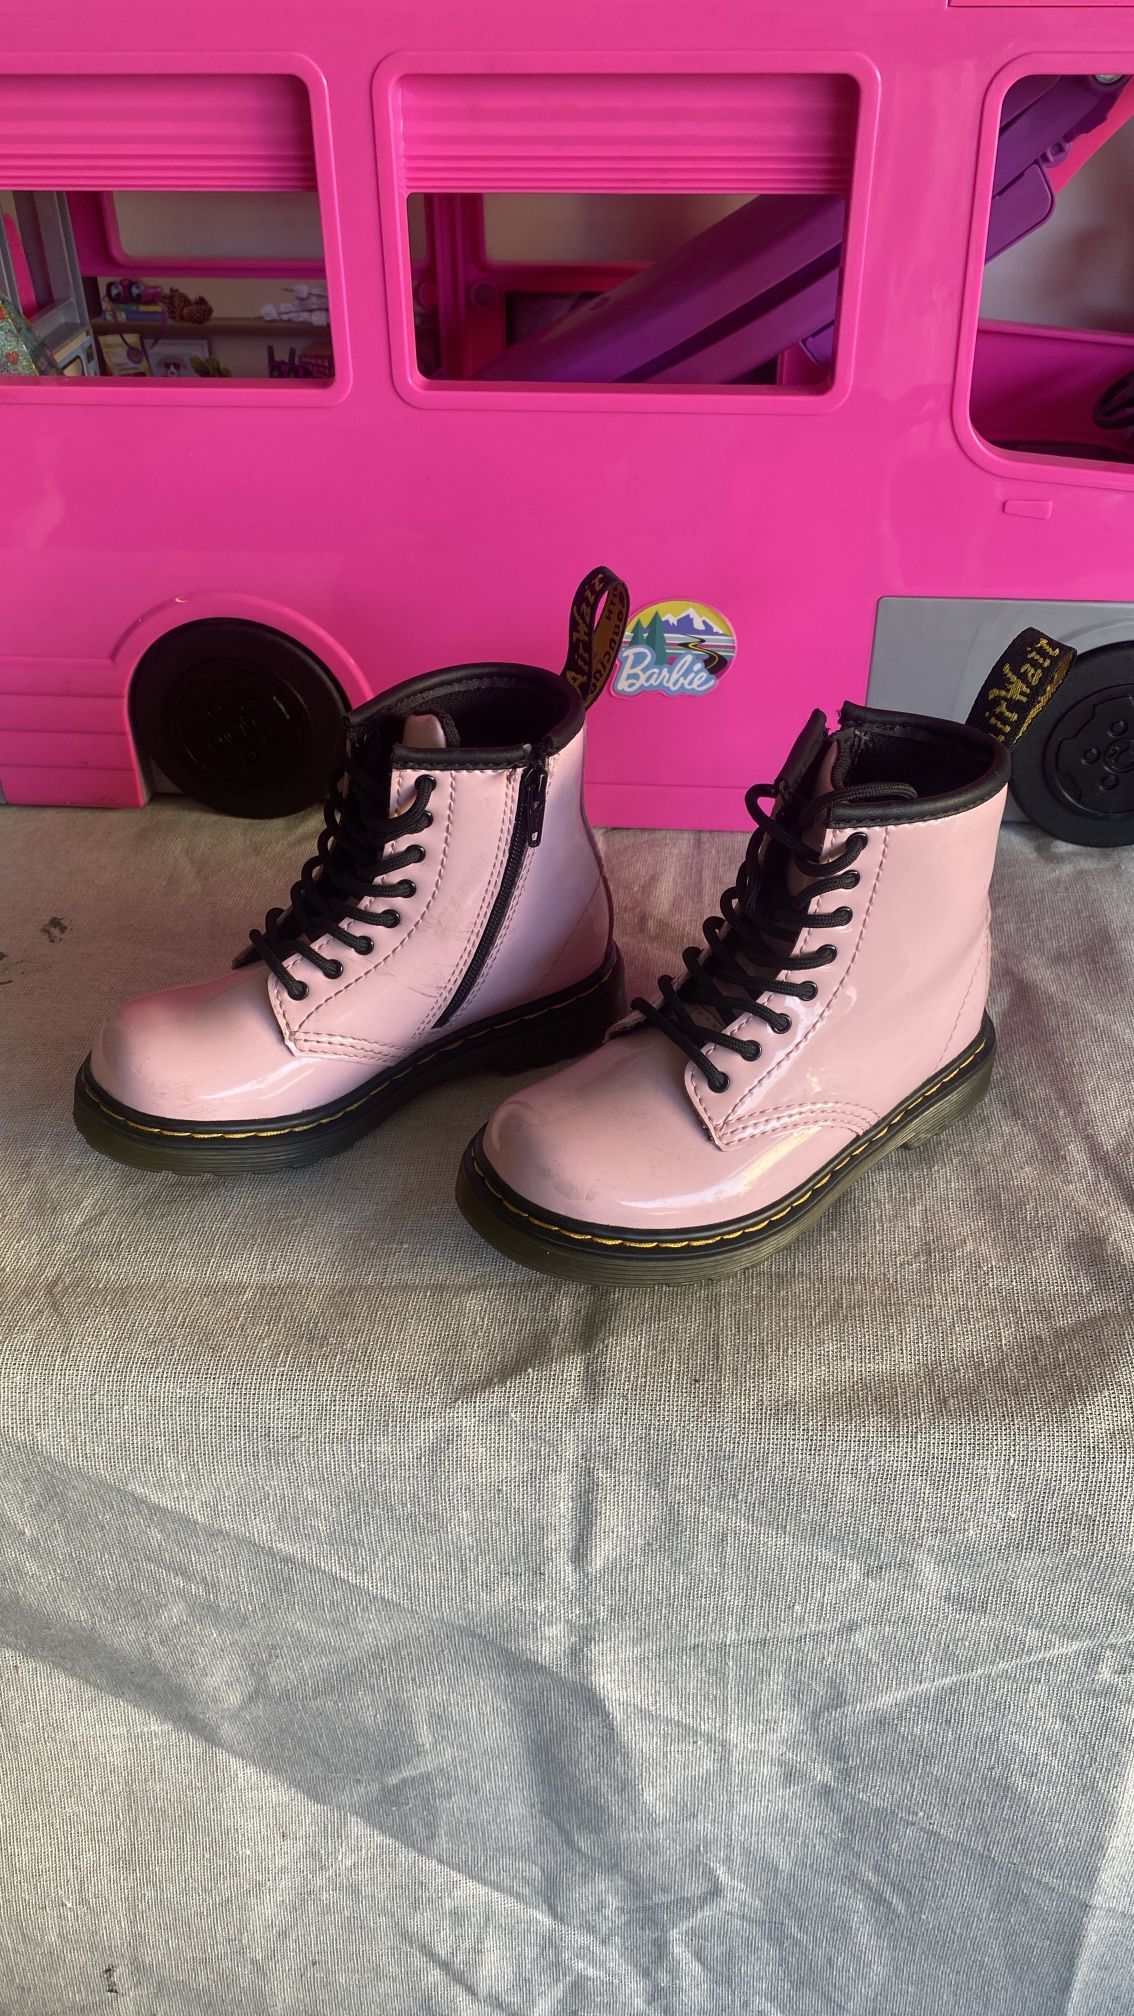 Doc Martins Pink Boots